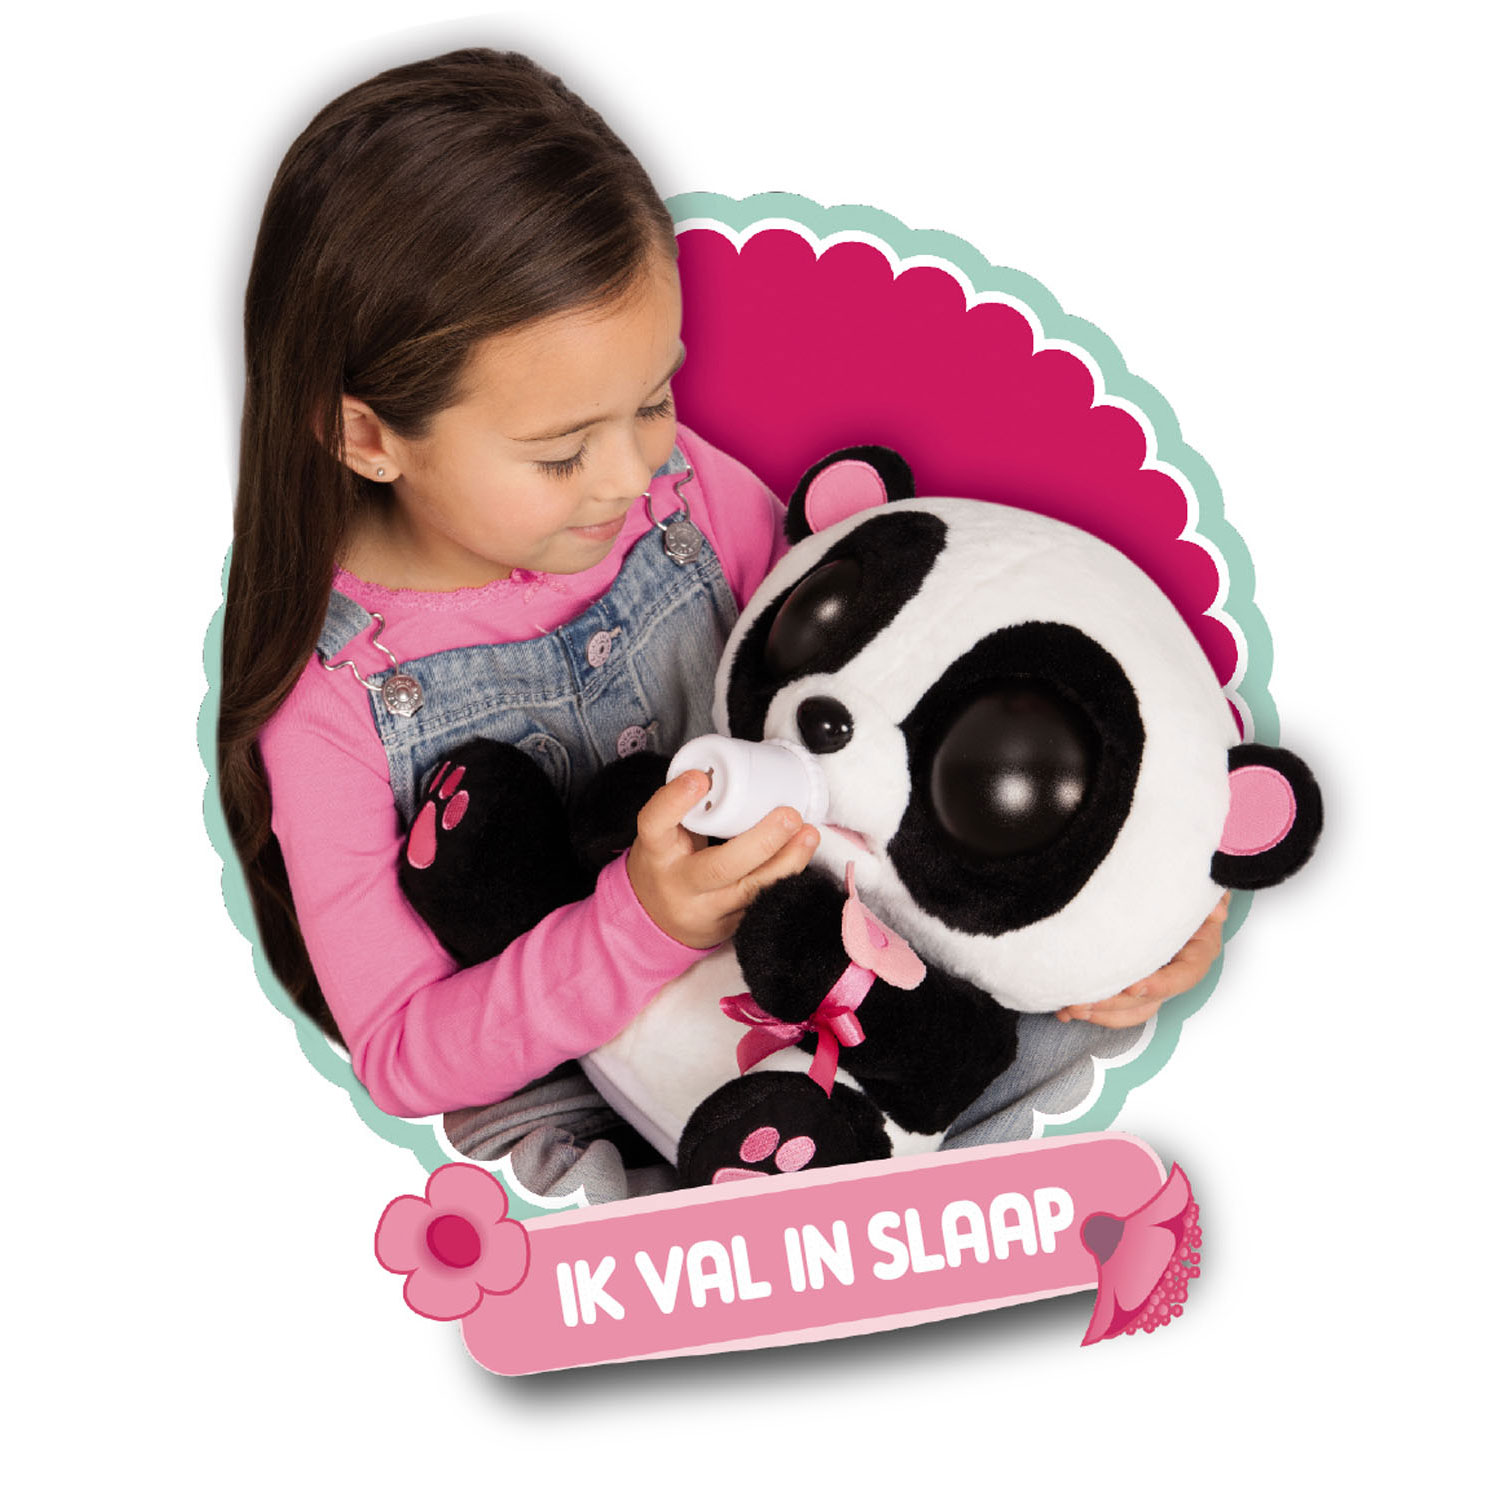 Топовые игрушки. Панда "YOYO" интерактивная. YOYO Панда игрушка ЦУМ. Игрушки для девочек. Интересные игрушки для девочек.